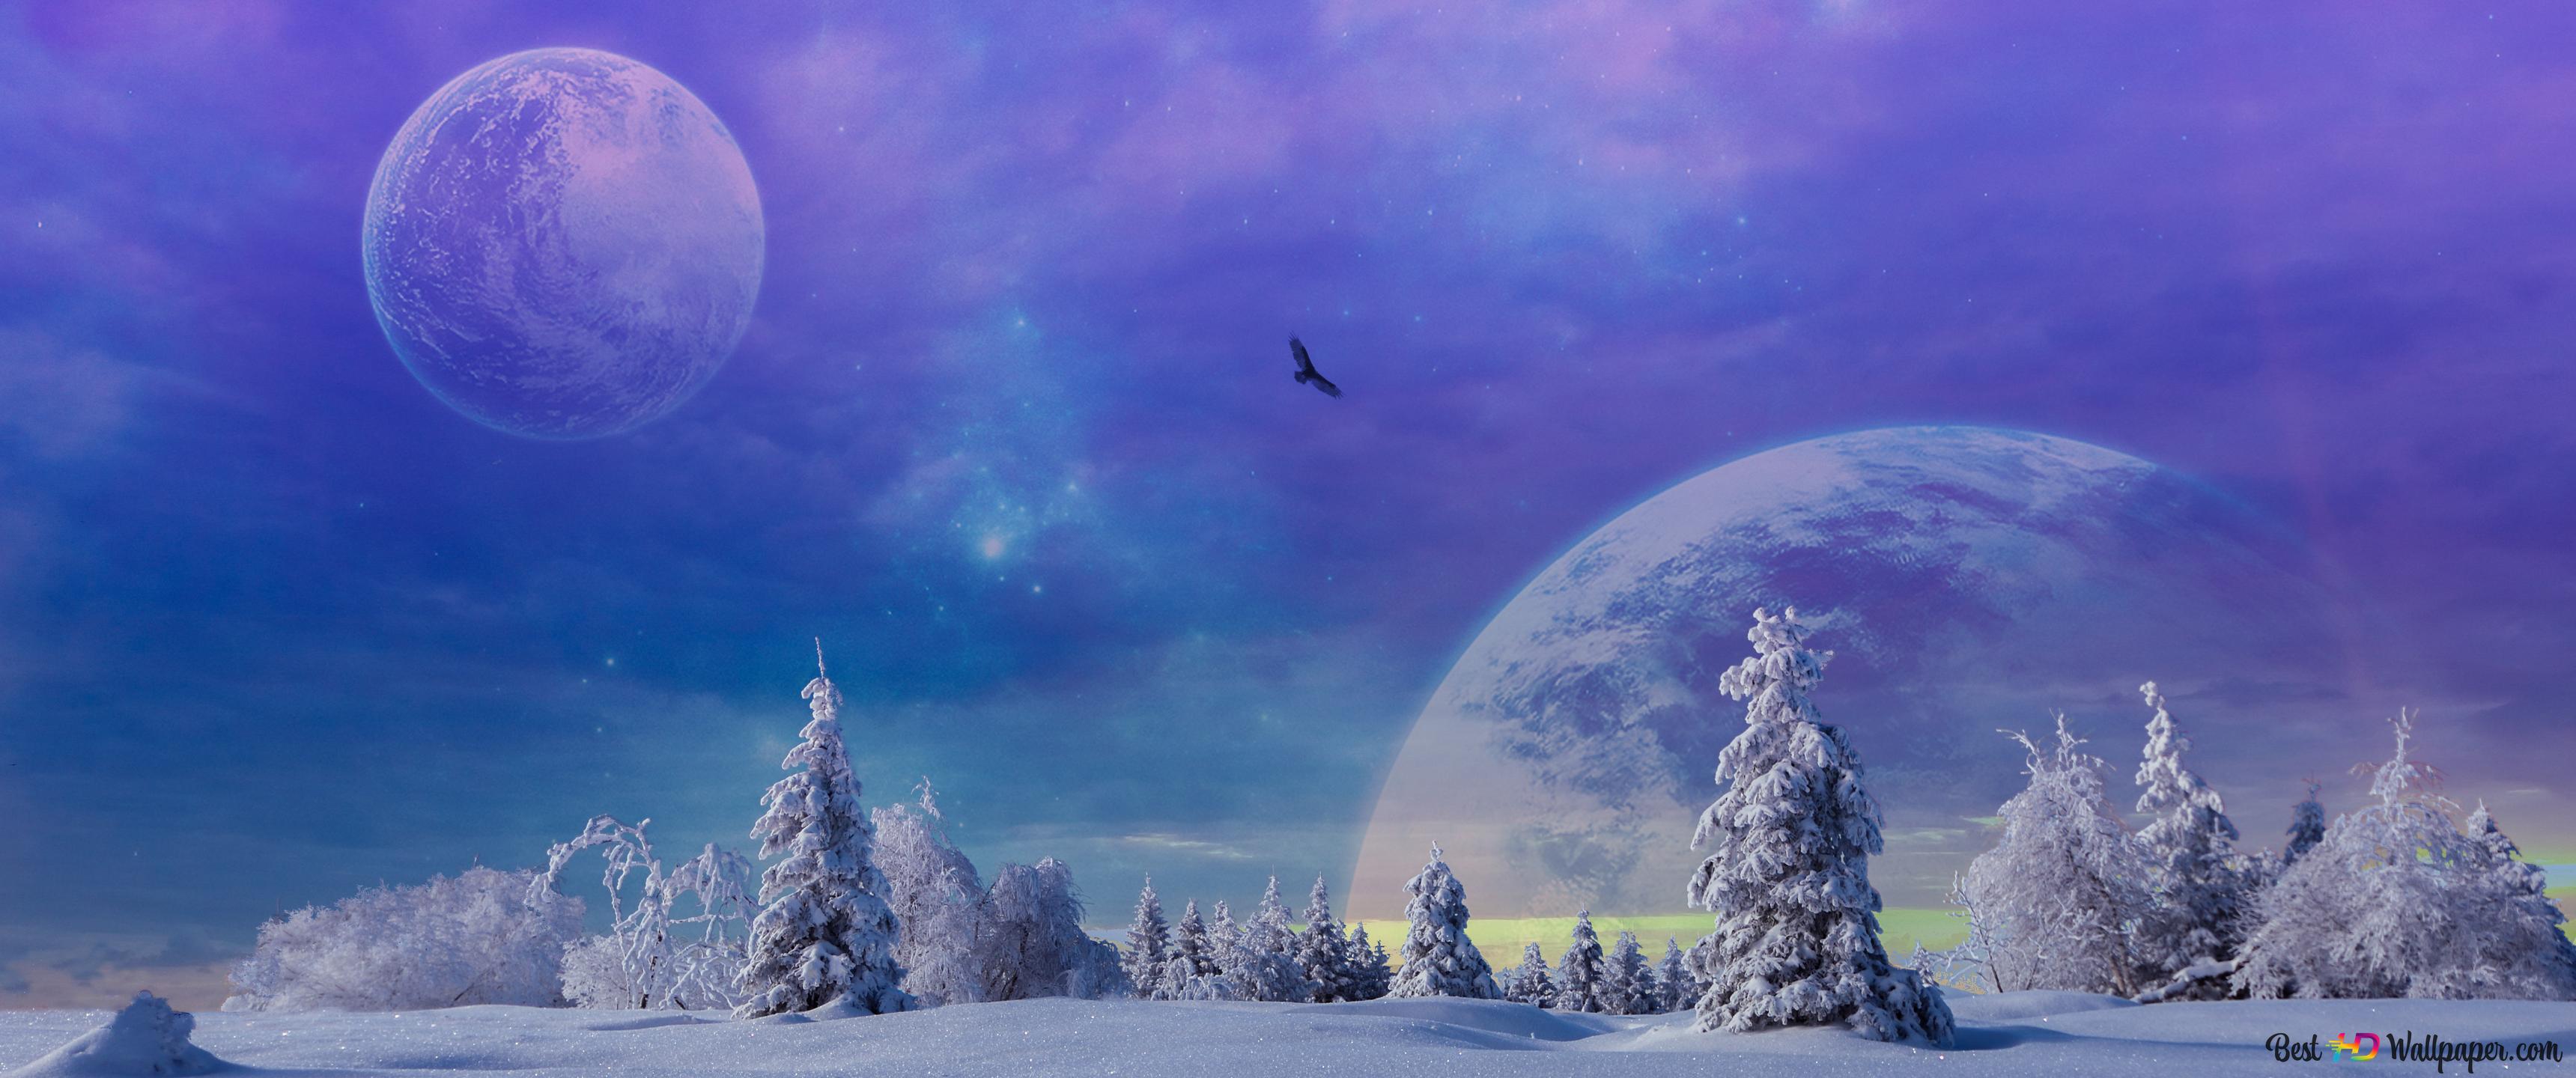 Fantasy winter 4K wallpaper download